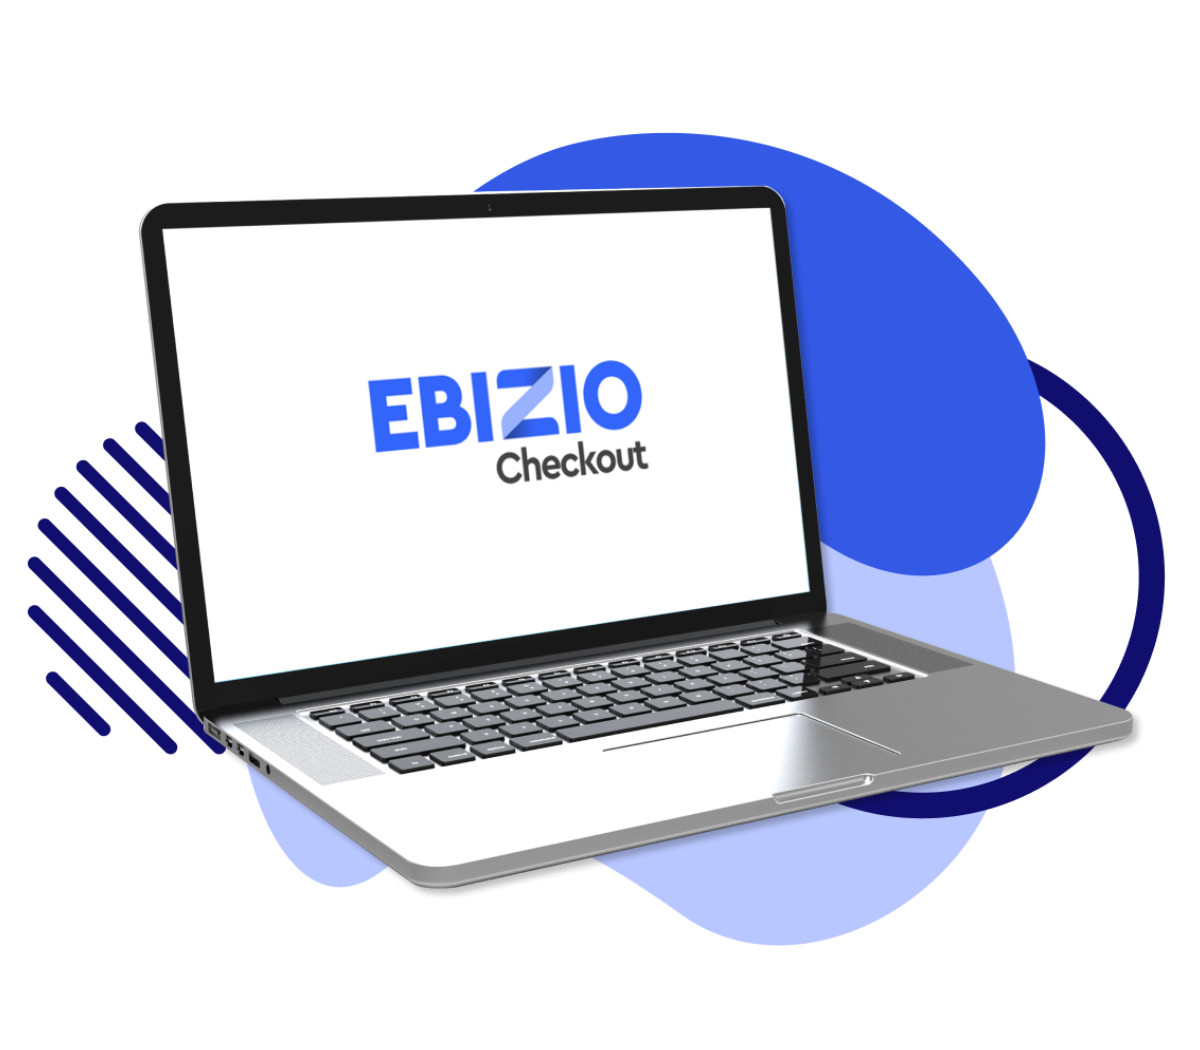 Ebizio Checkout logo on laptop mockup